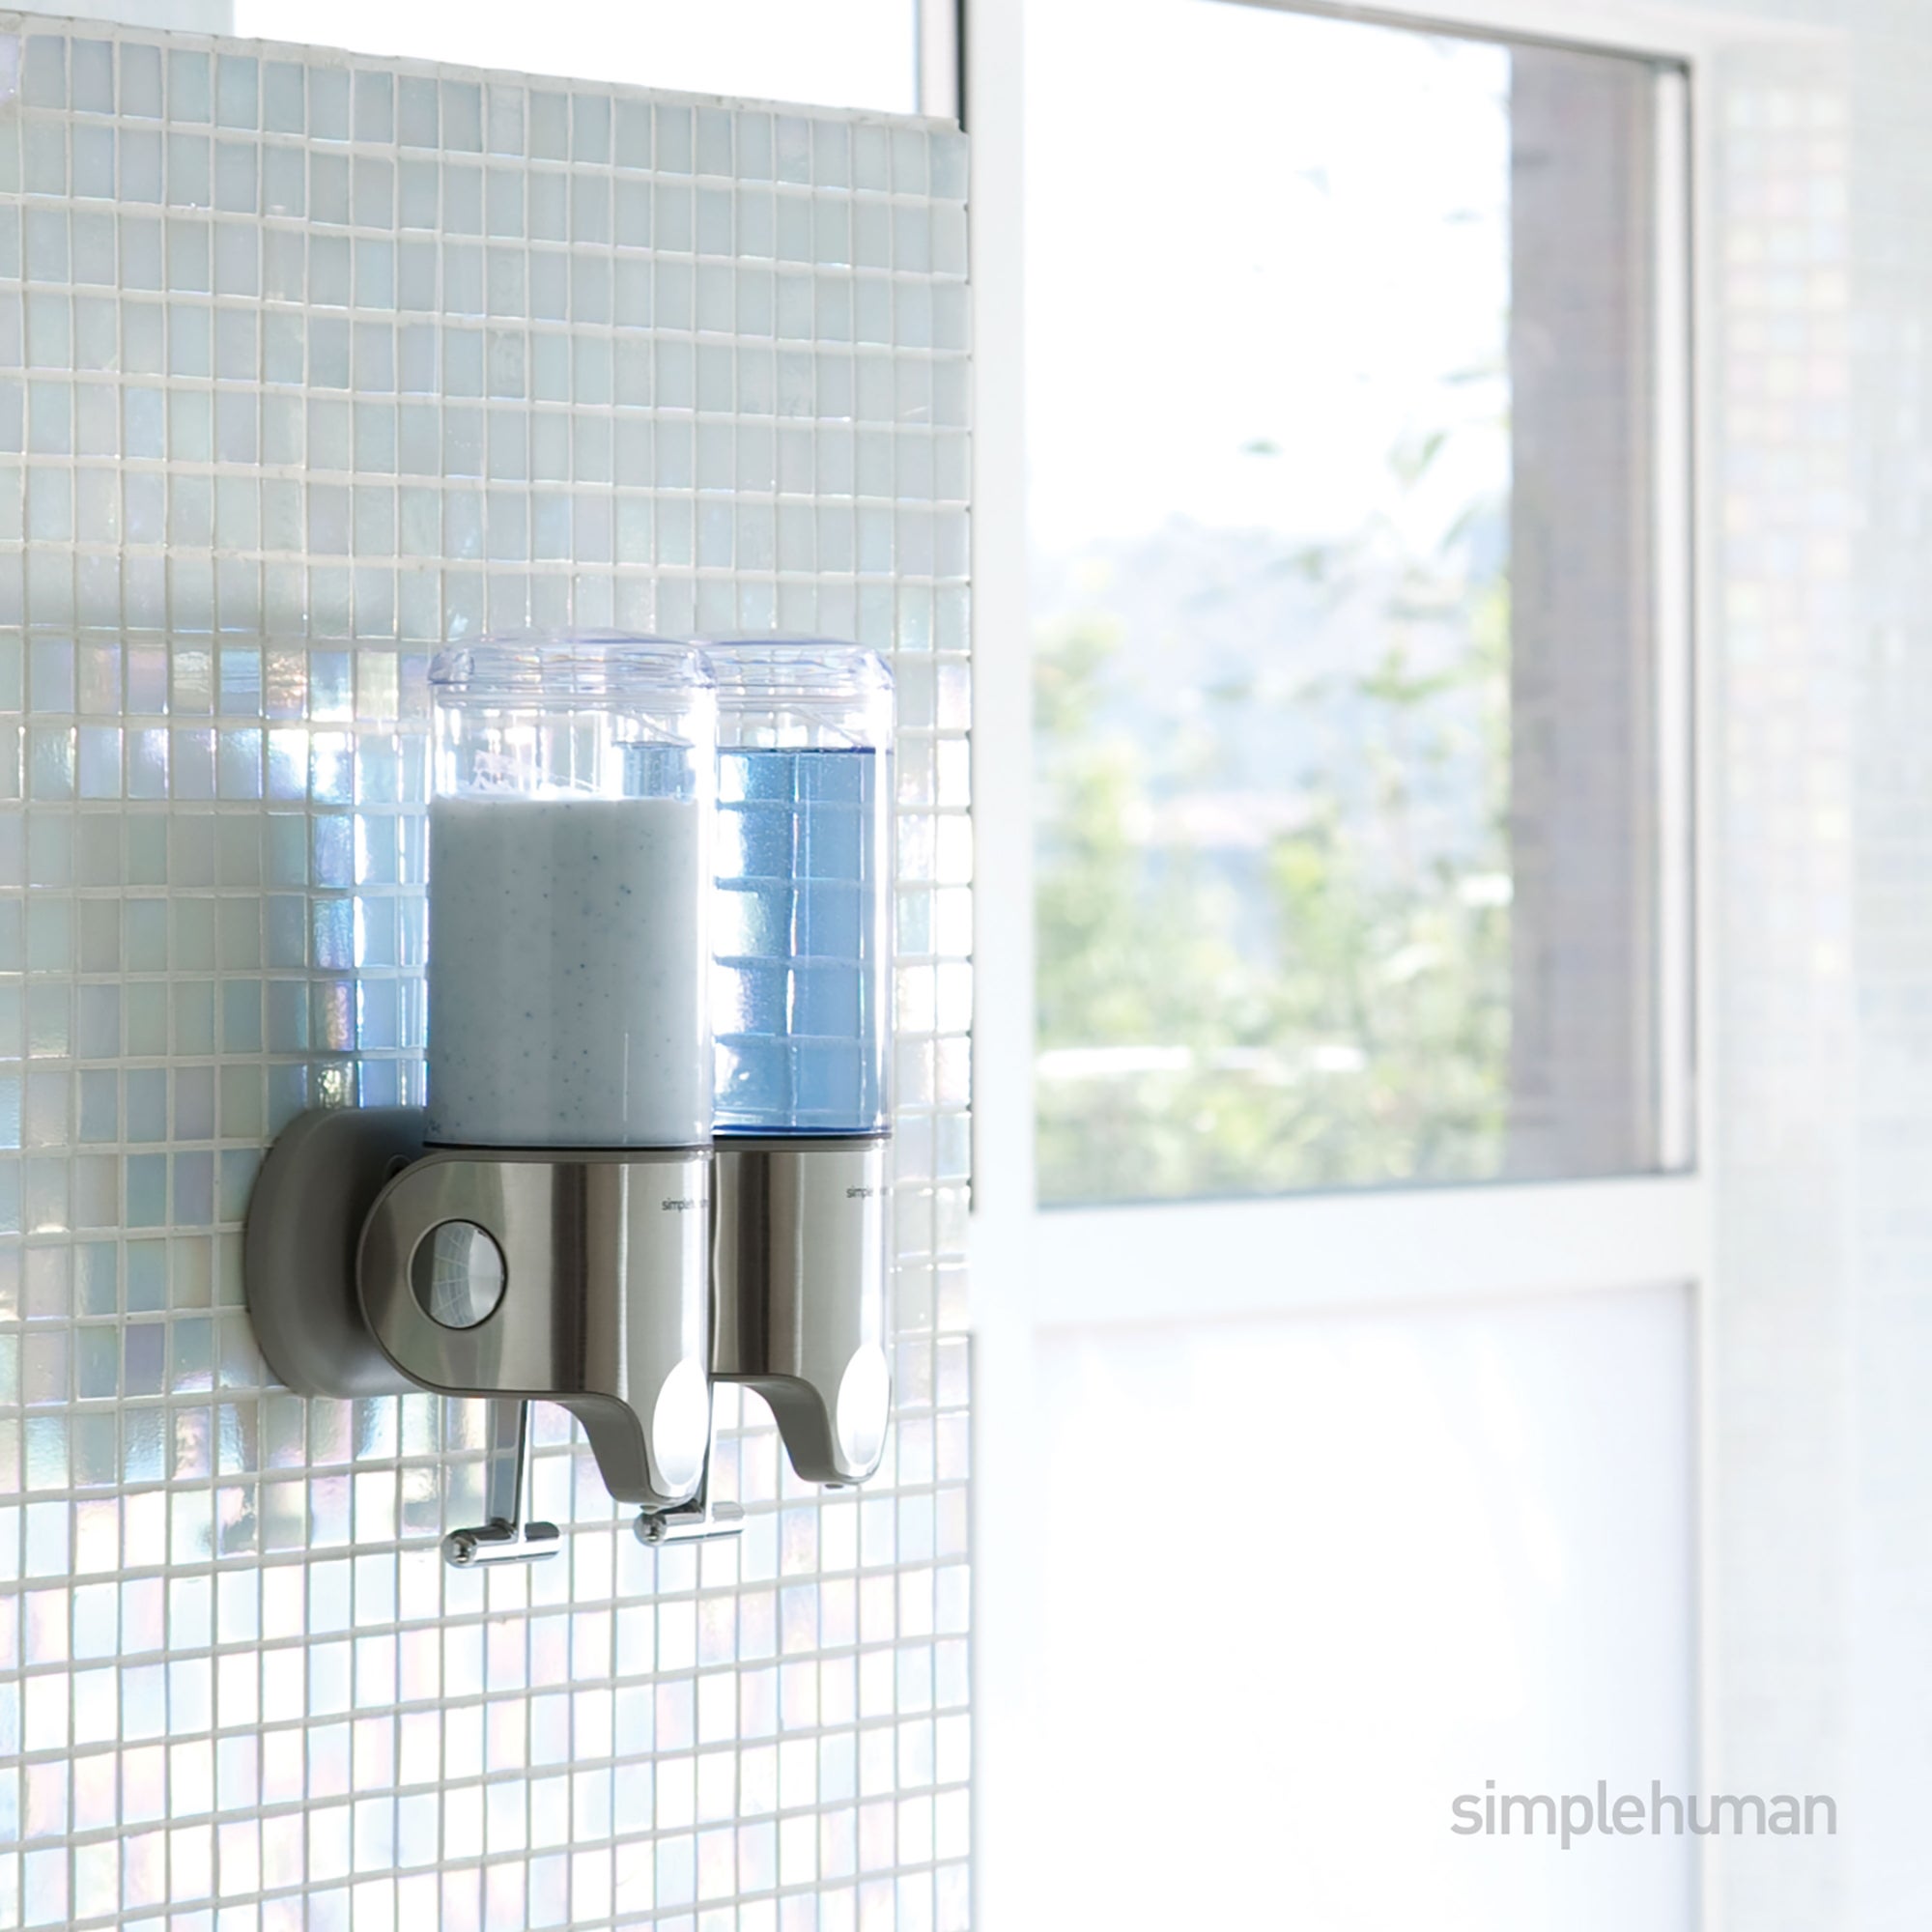 SimpleHuman Soap Dispenser Review 